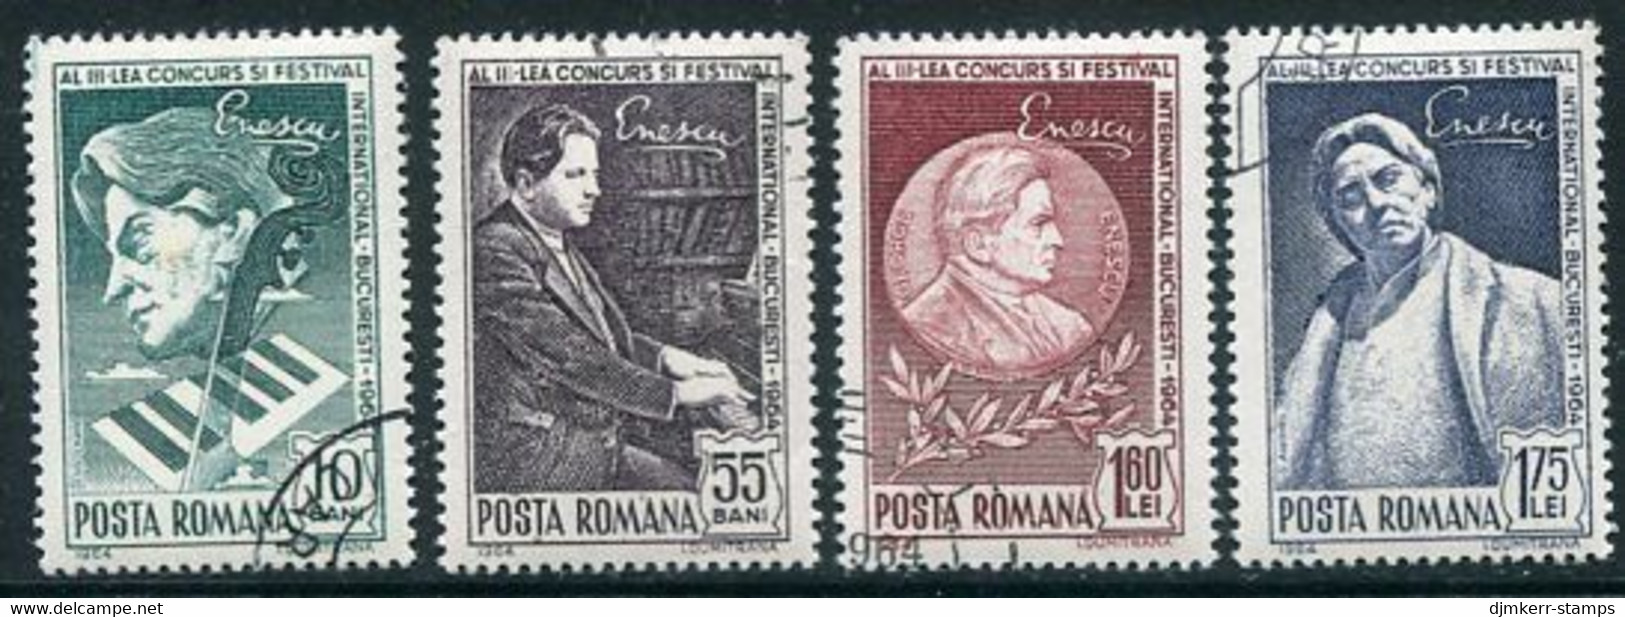 ROMANIA 1964 Enescu Music Competition Used.  Michel 2326-29 - Gebruikt